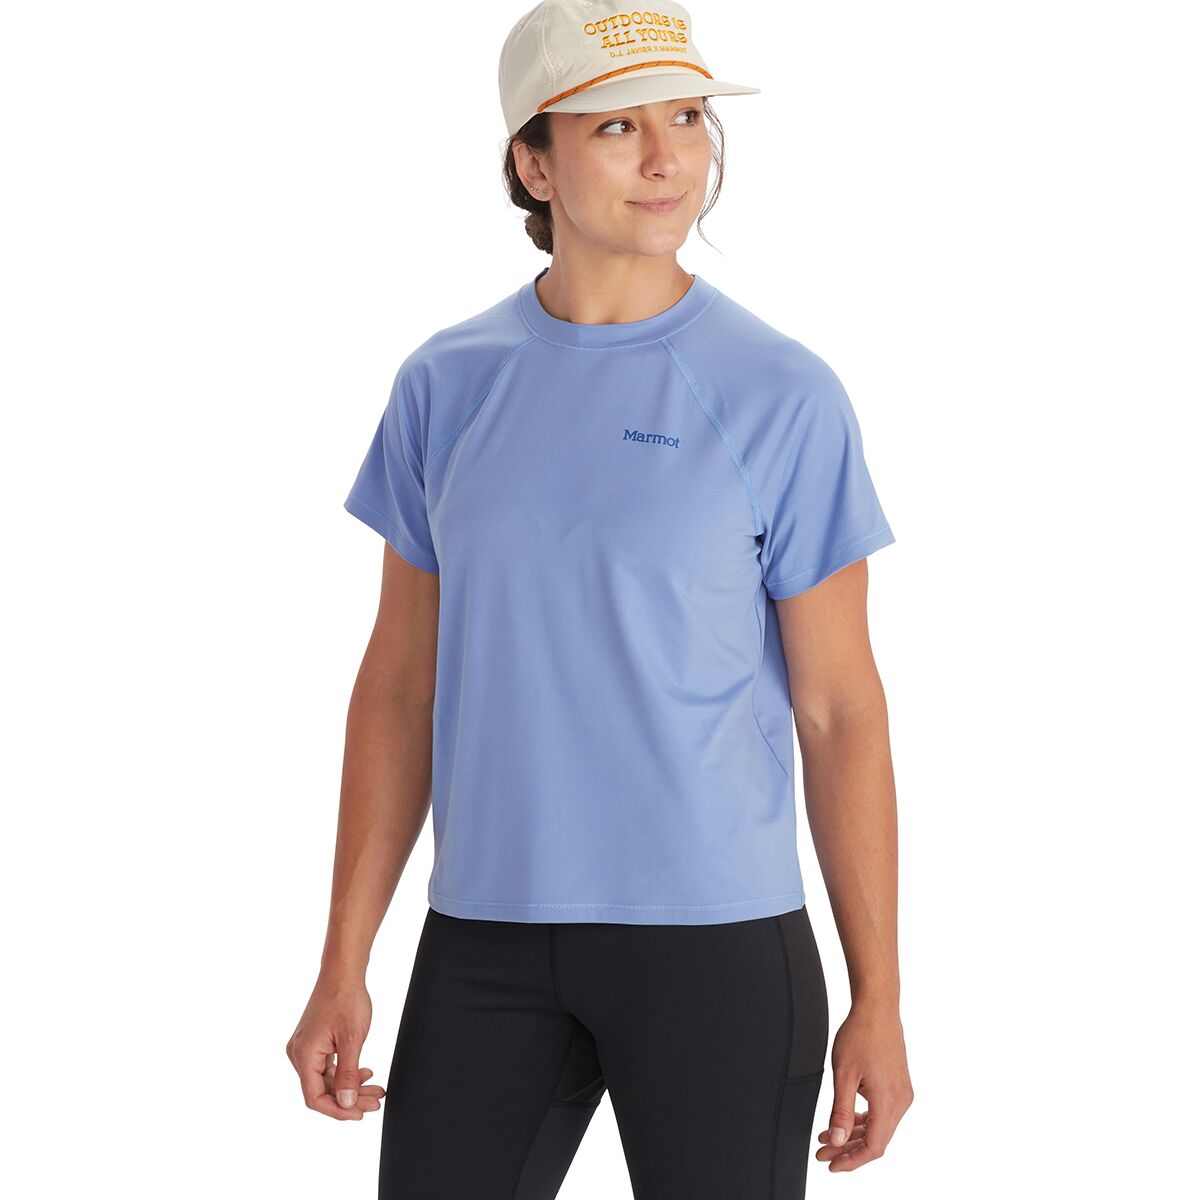 Windridge Short-Sleeve T-Shirt - Women